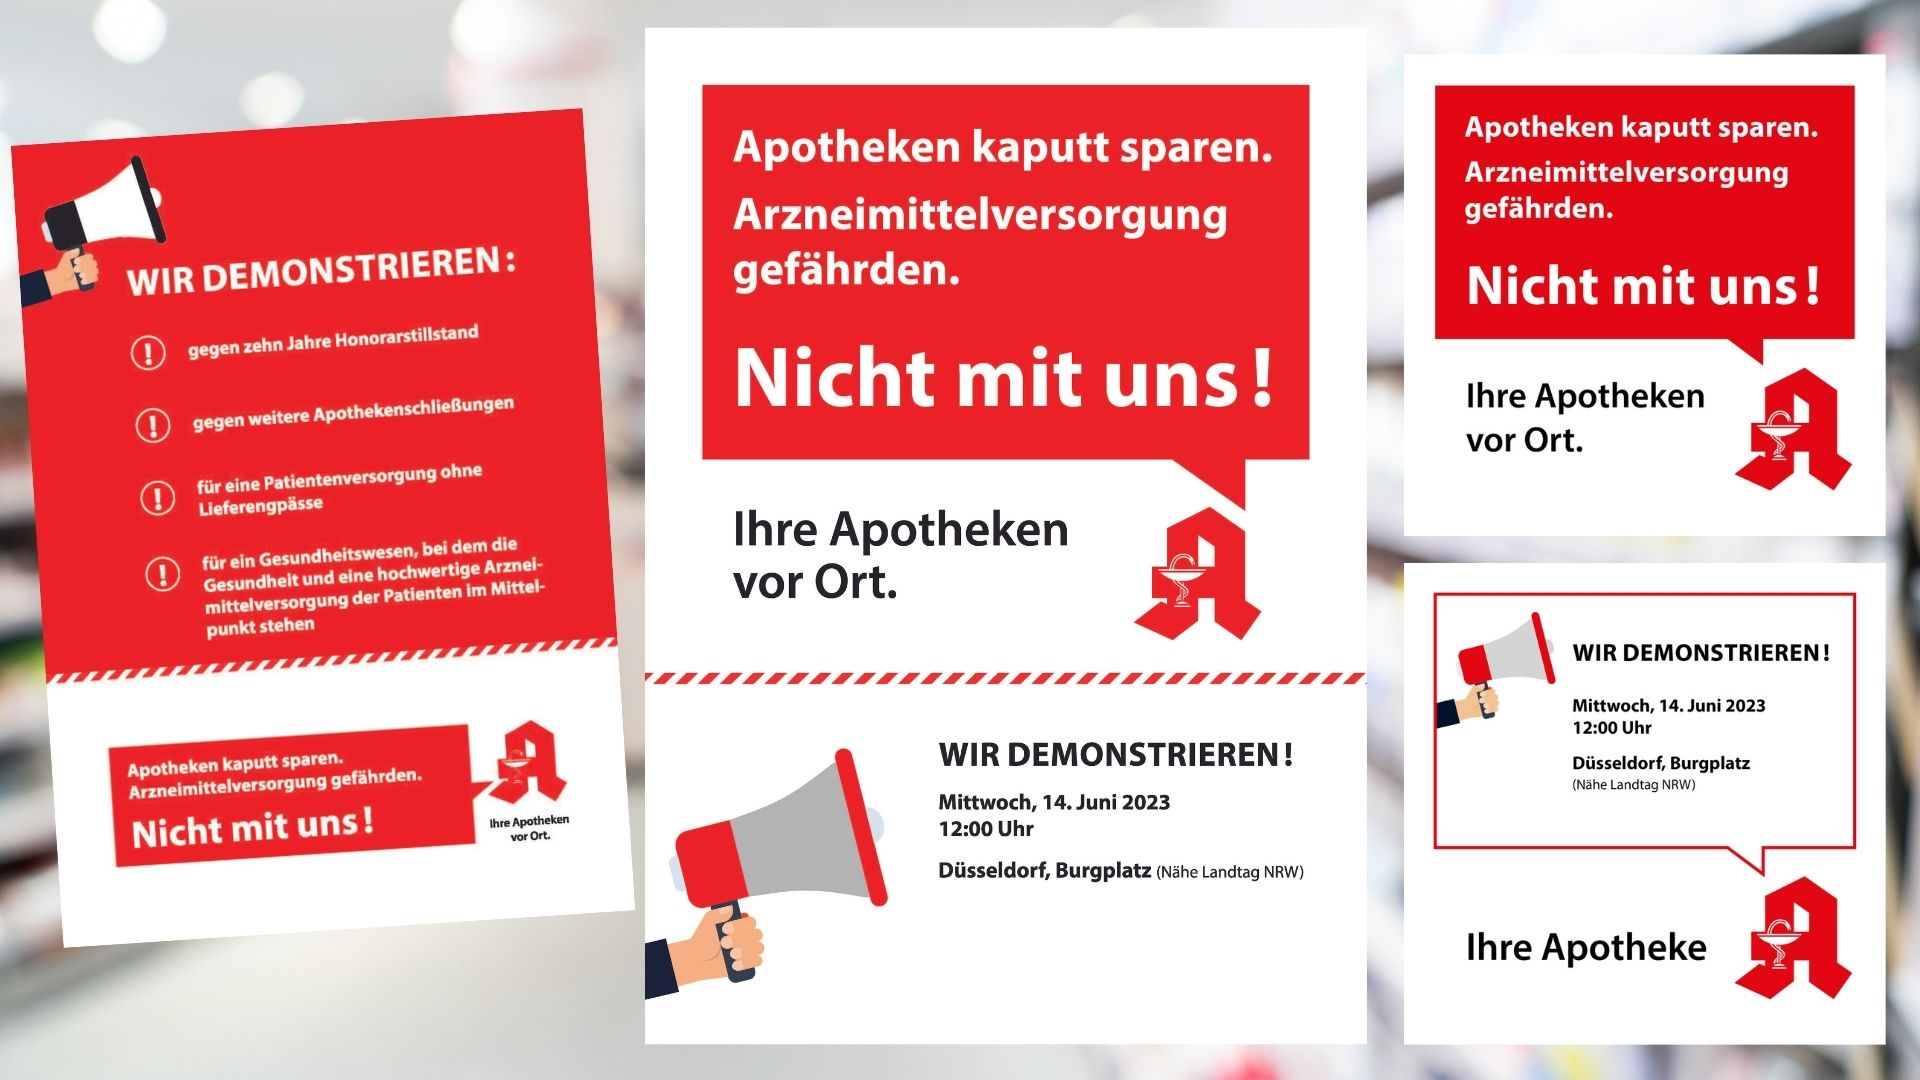 Am 14. Juni 2023 werden Apotheken in Deutschland protestieren.